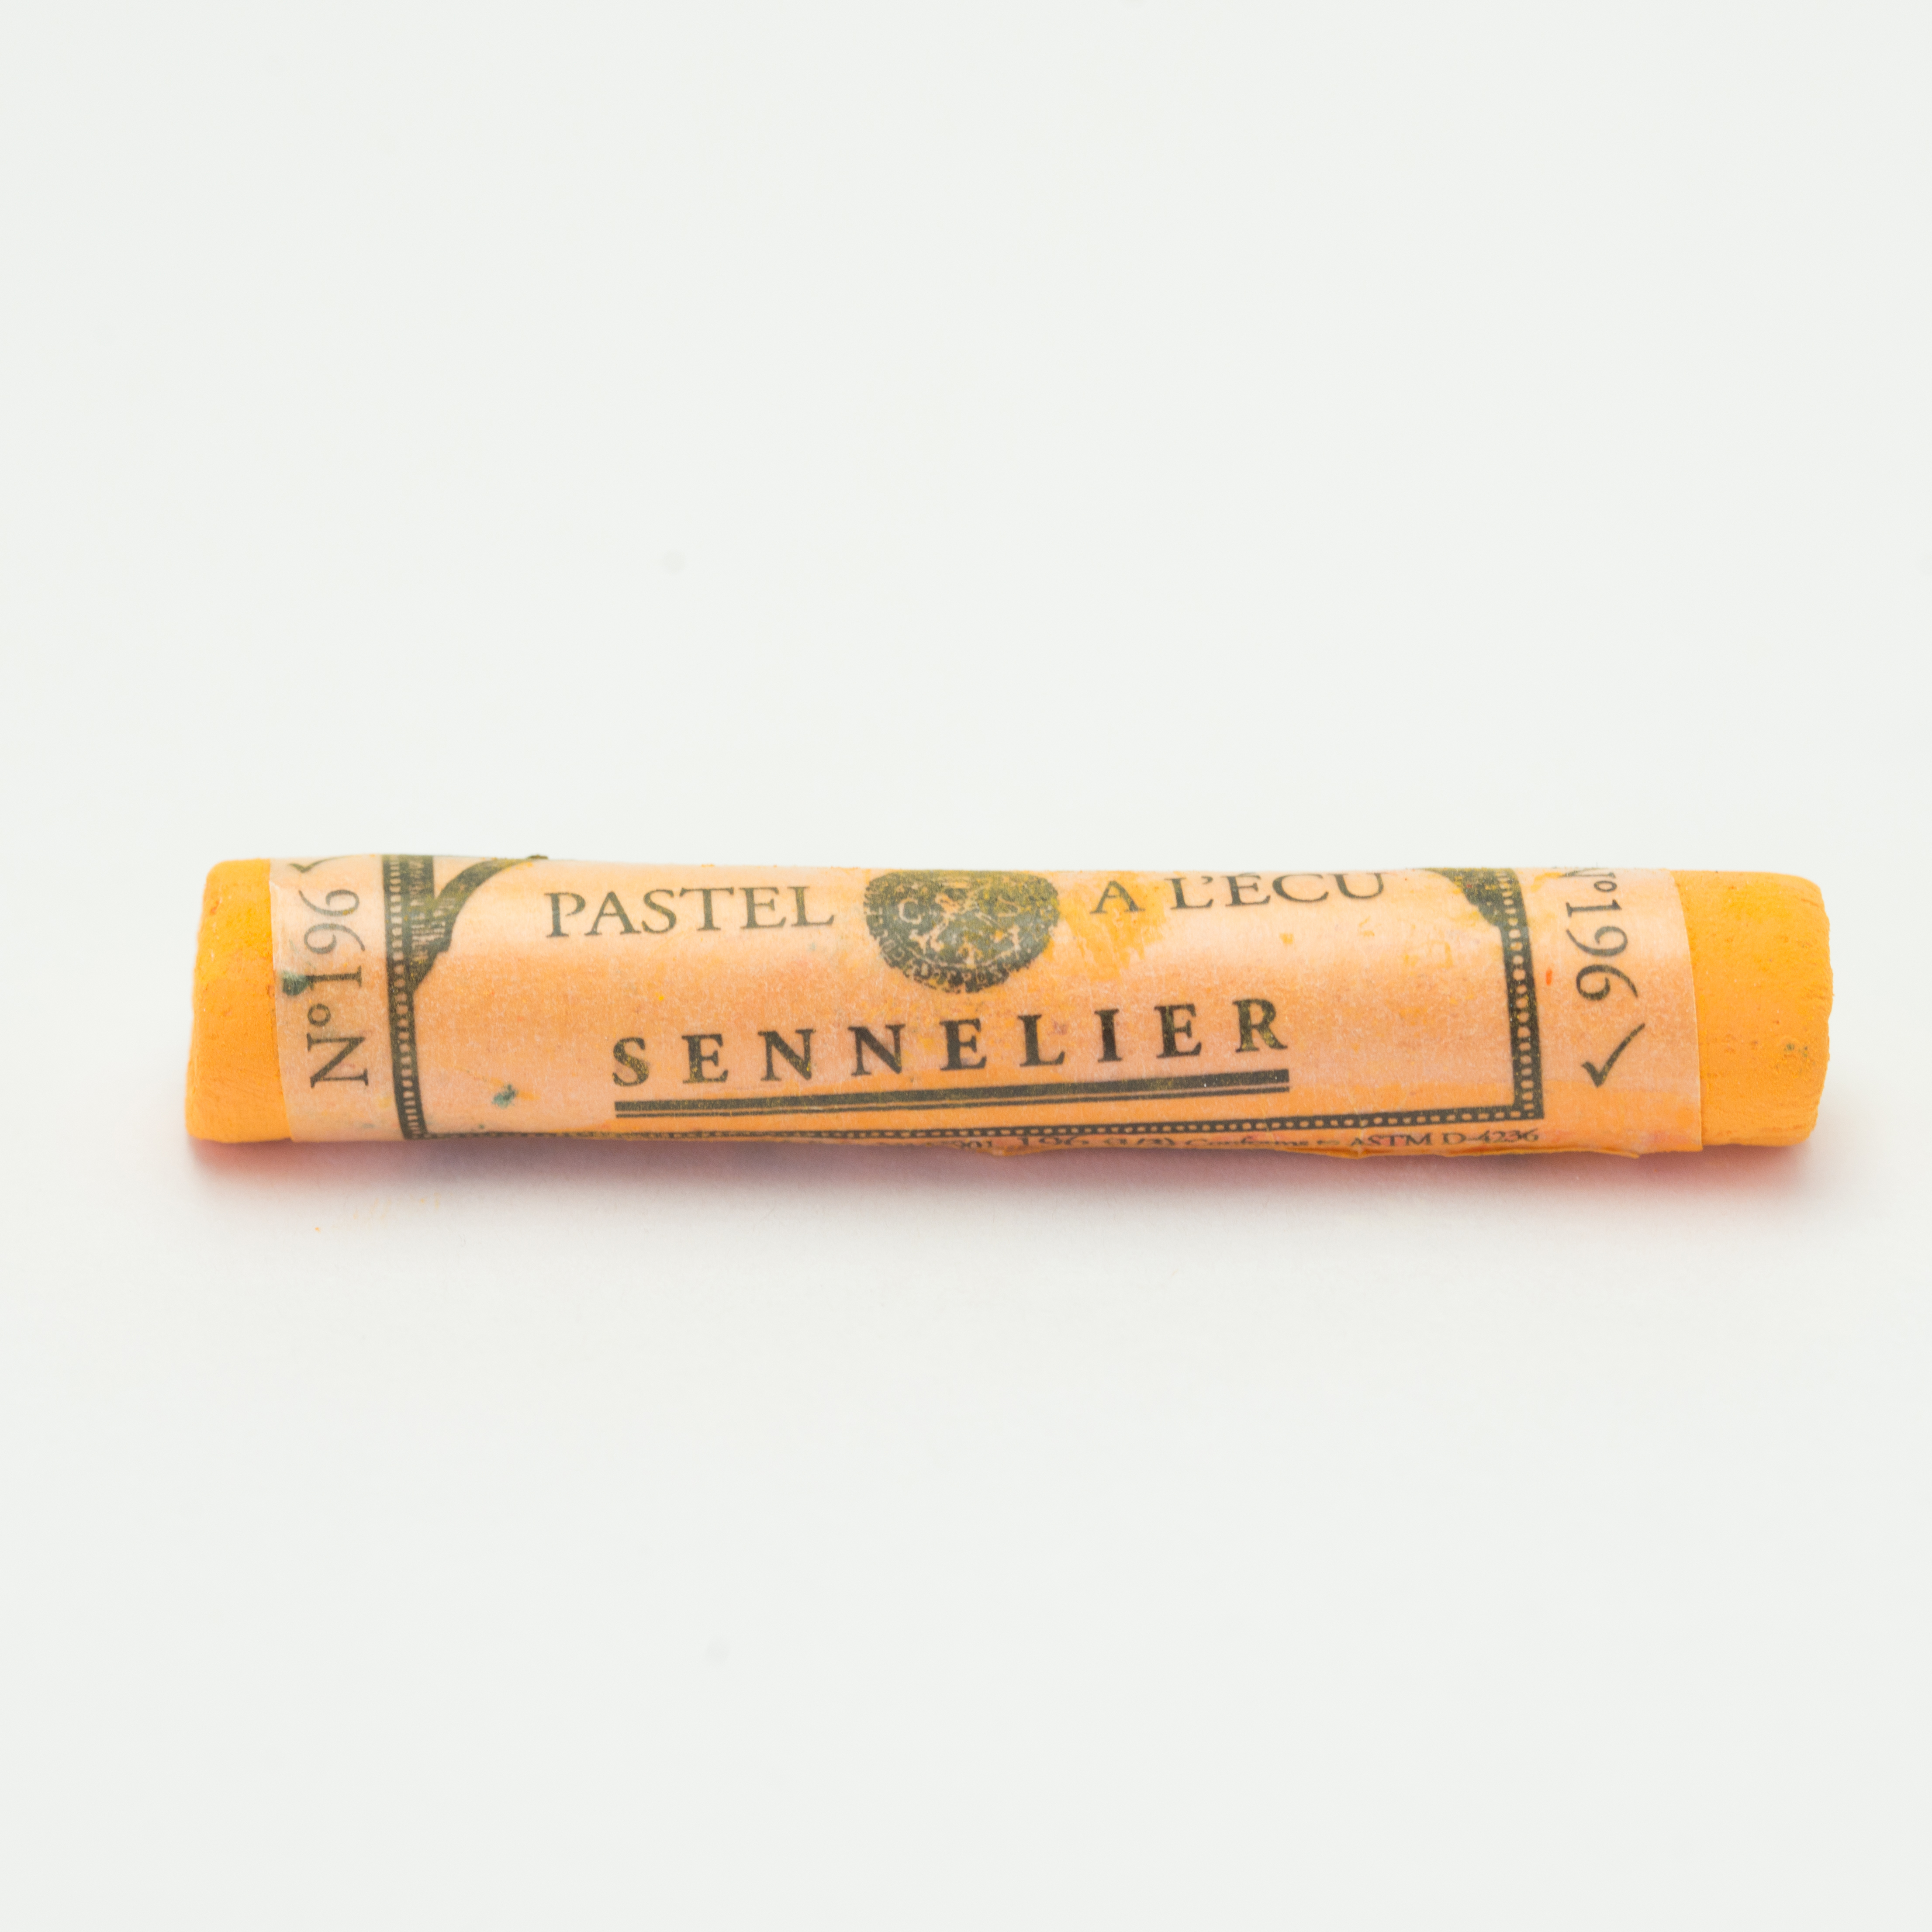 Sennelier Extra Soft Pastels - Cadmium Yellow Orange 196